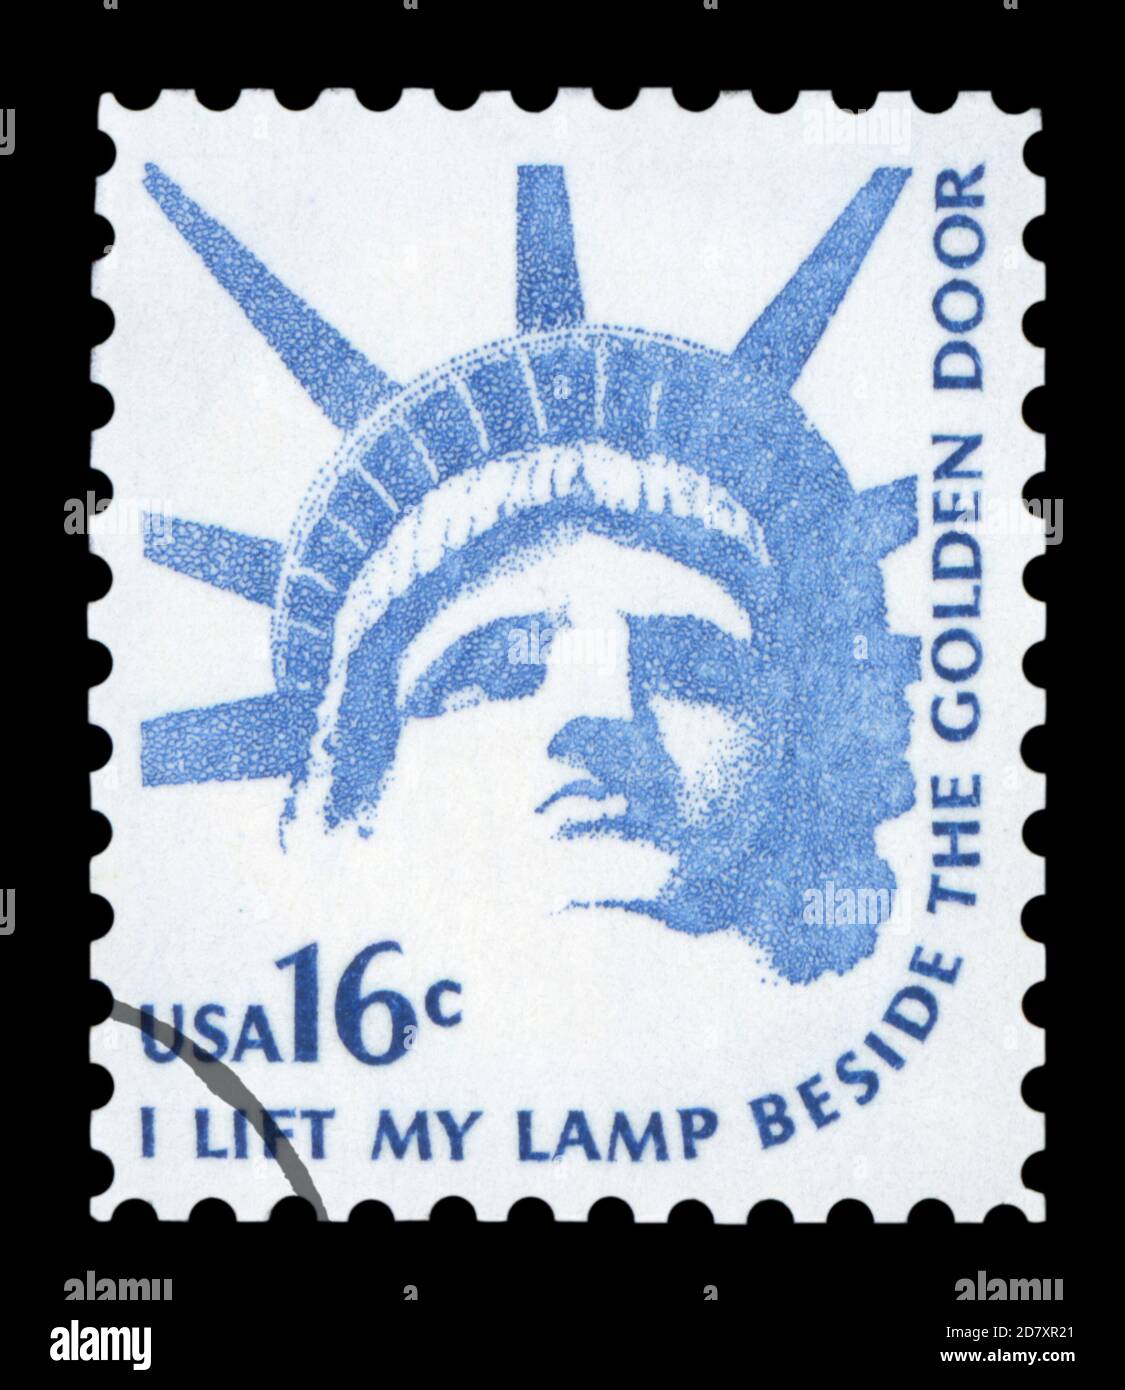 Statue of Liberty, postage stamp, USA, 1954 Stock Photo - Alamy